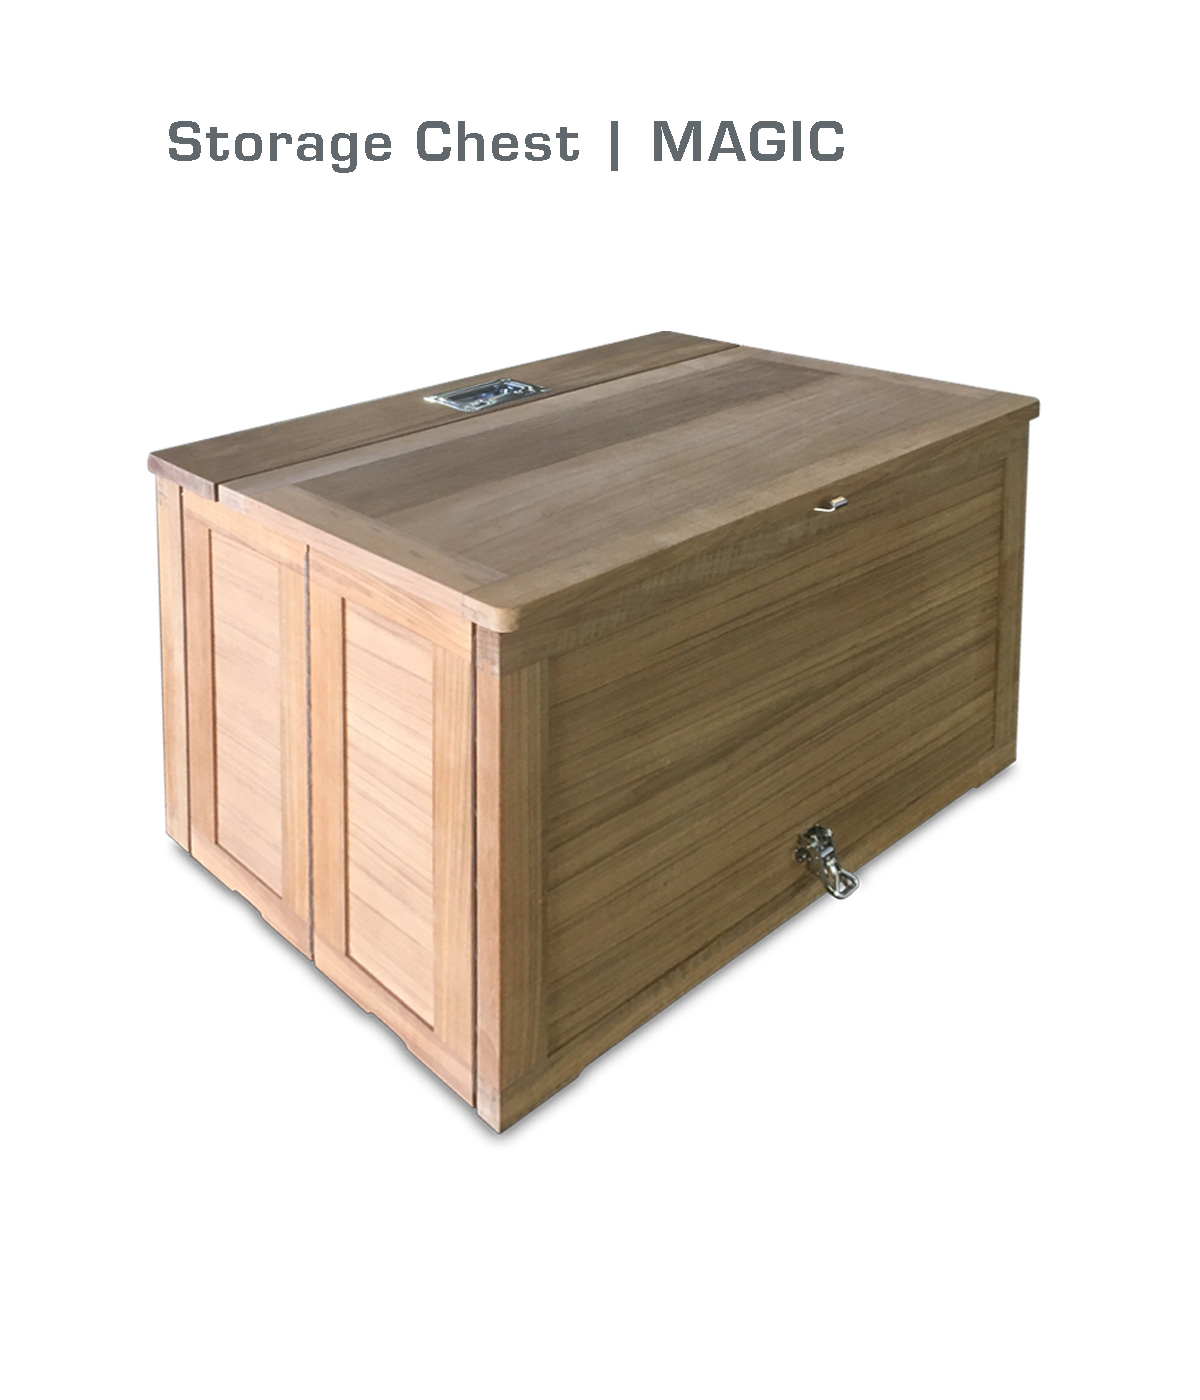 Storage chest | Magic